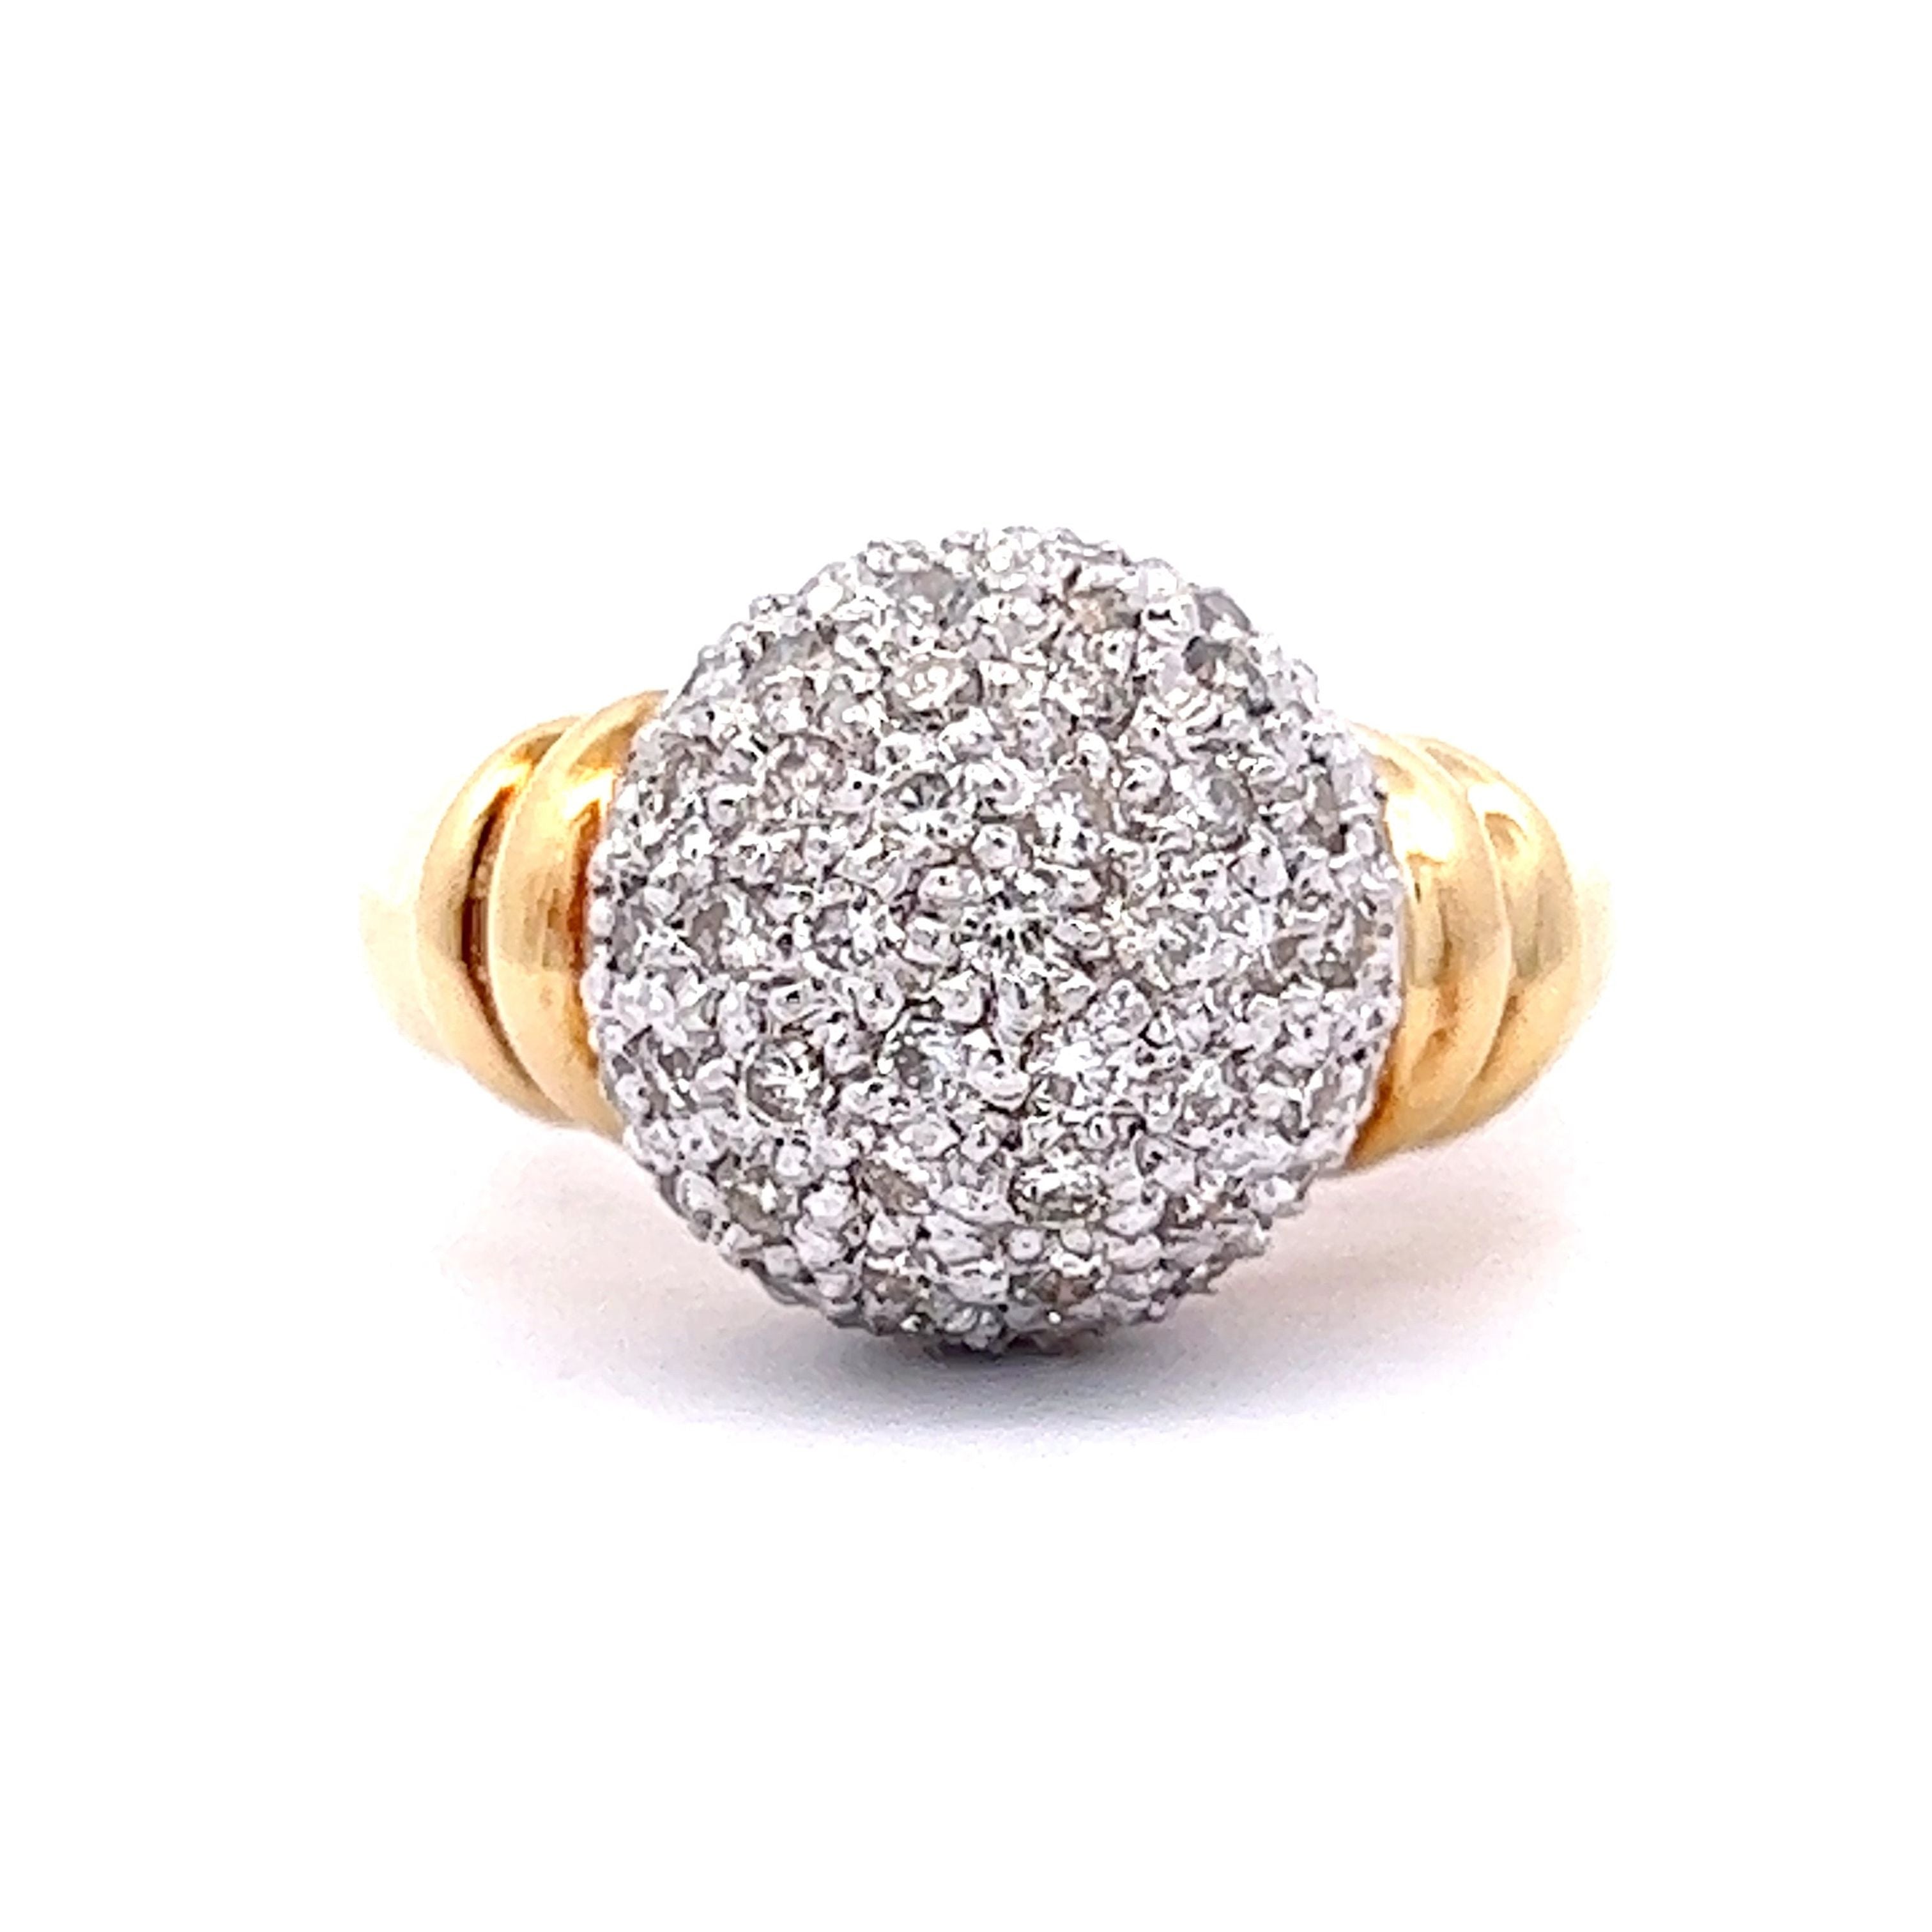 12mm NATURAL DIAMOND COCKTAIL RING 1.70ct HALO ILLUSION SETTING 14k WHITE  GOLD | eBay